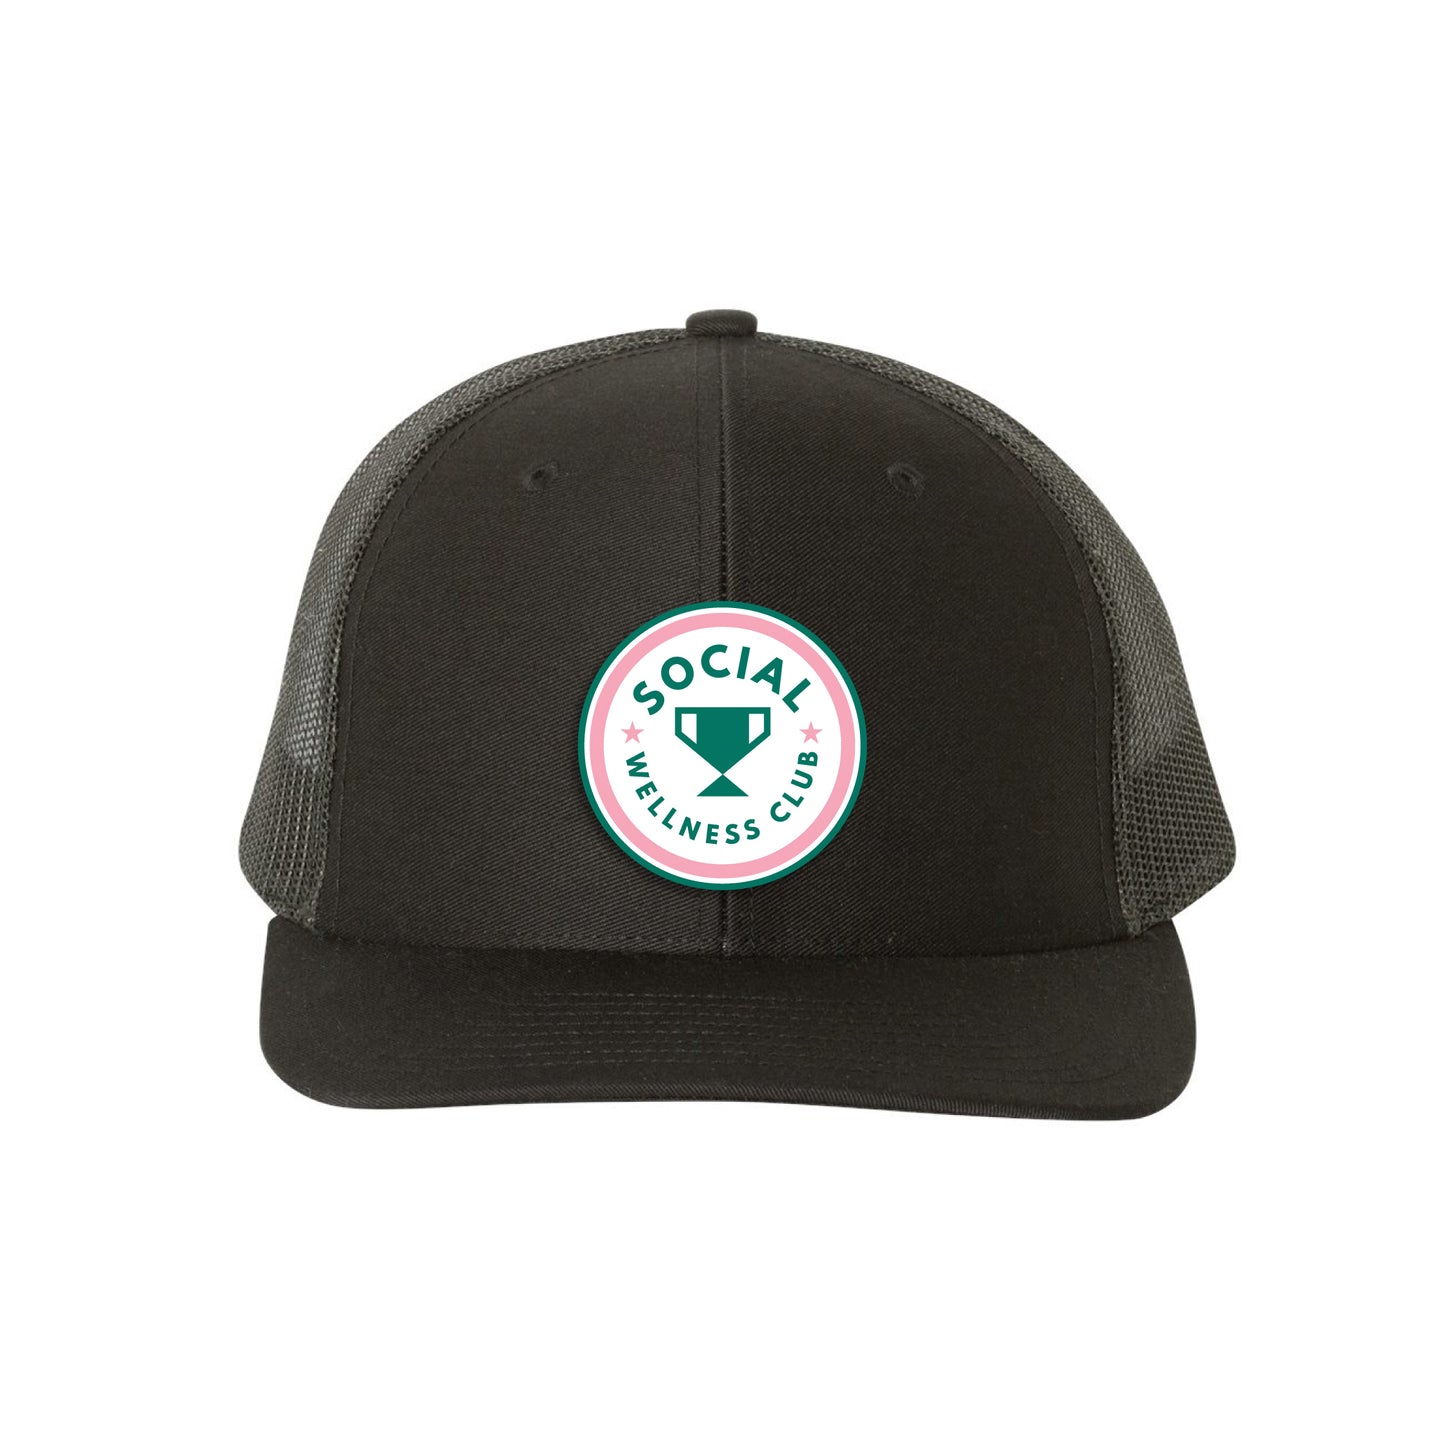 Social Wellness Club Trucker Hat